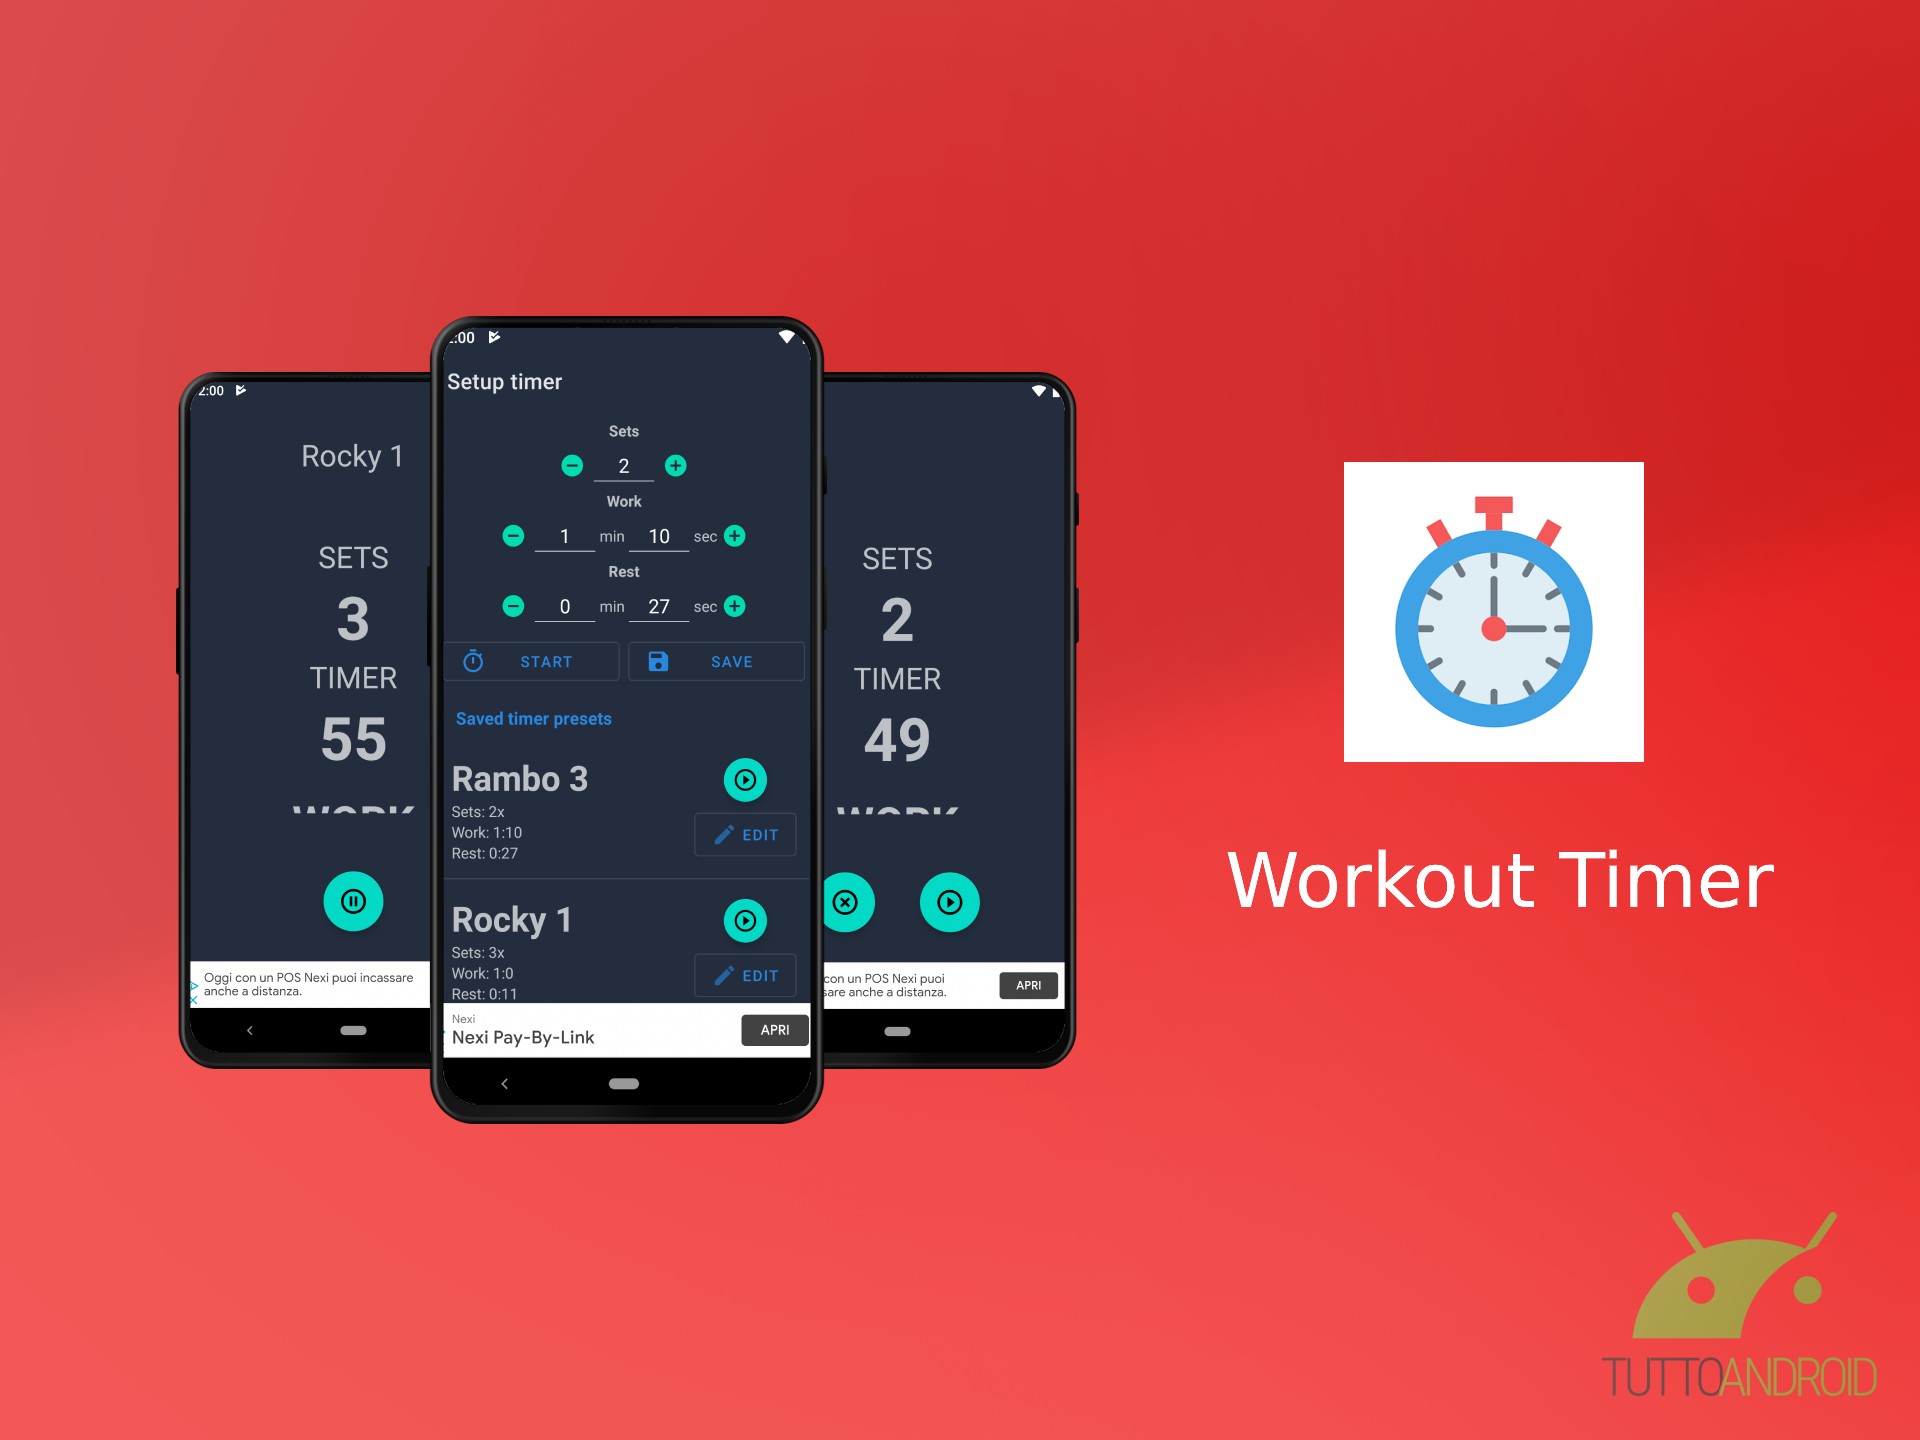 L'app Workout Timer gestisce gli allenamenti a intervalli